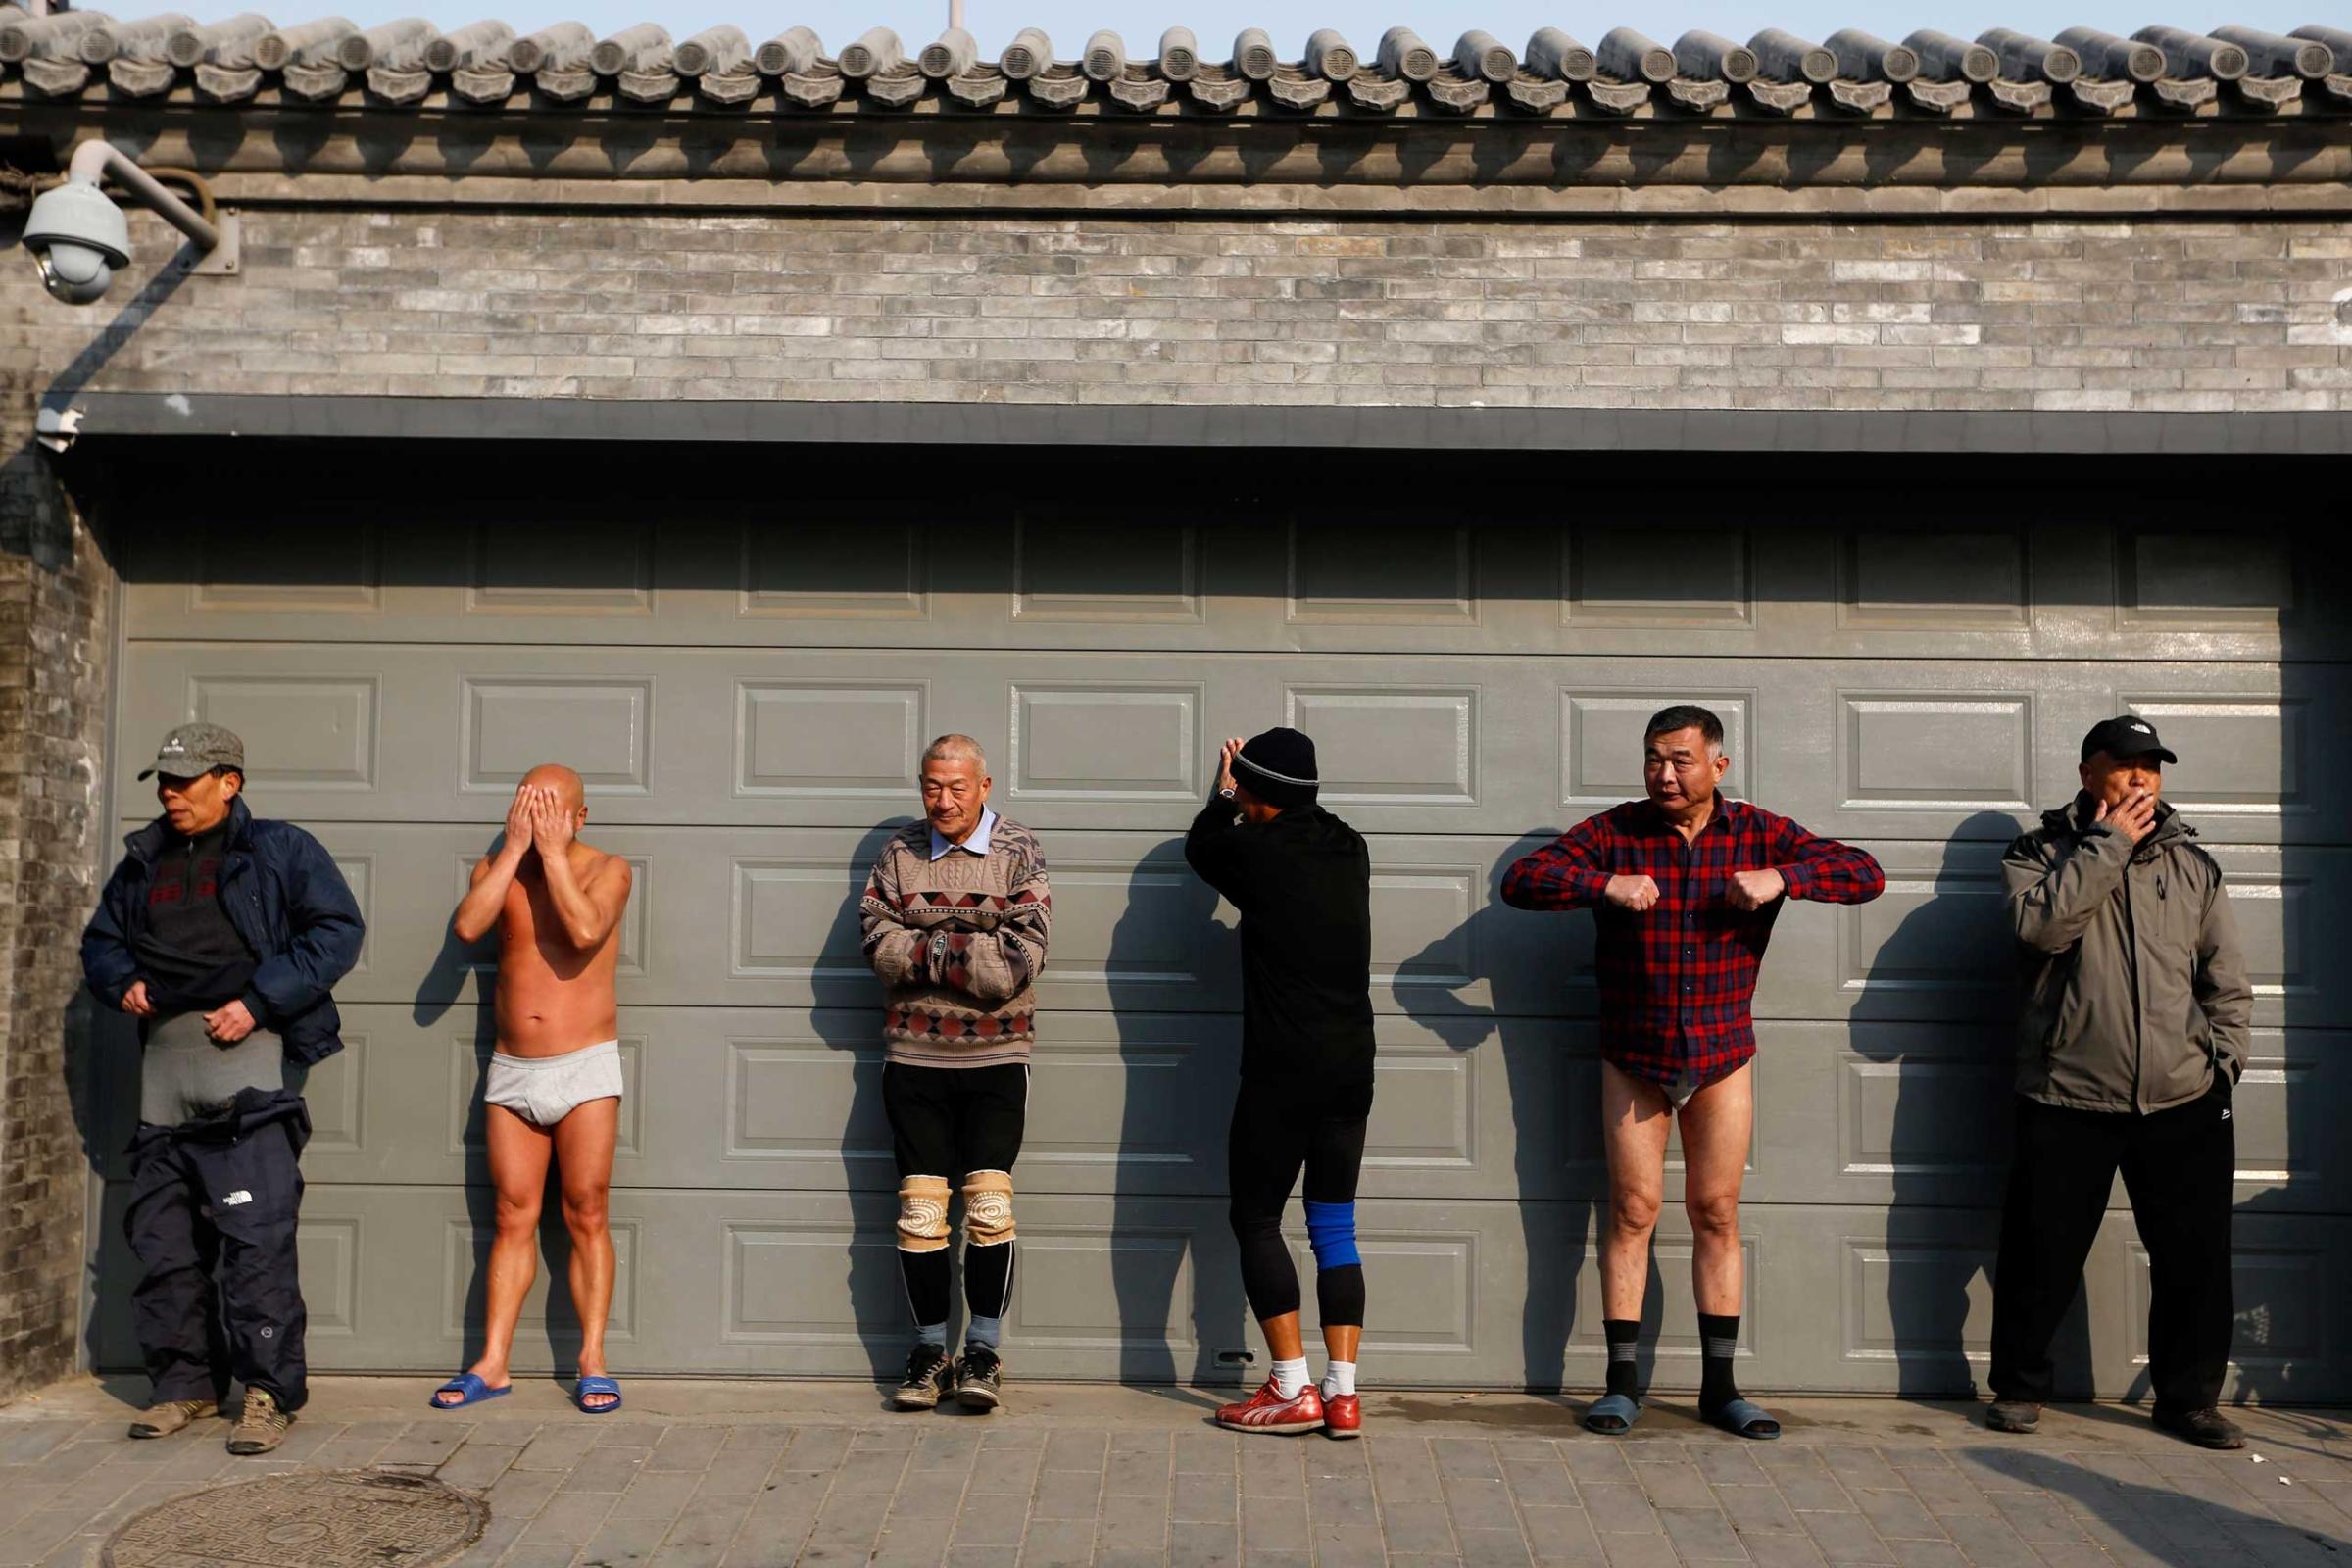 Winter swimming enthusiasts in Beijing